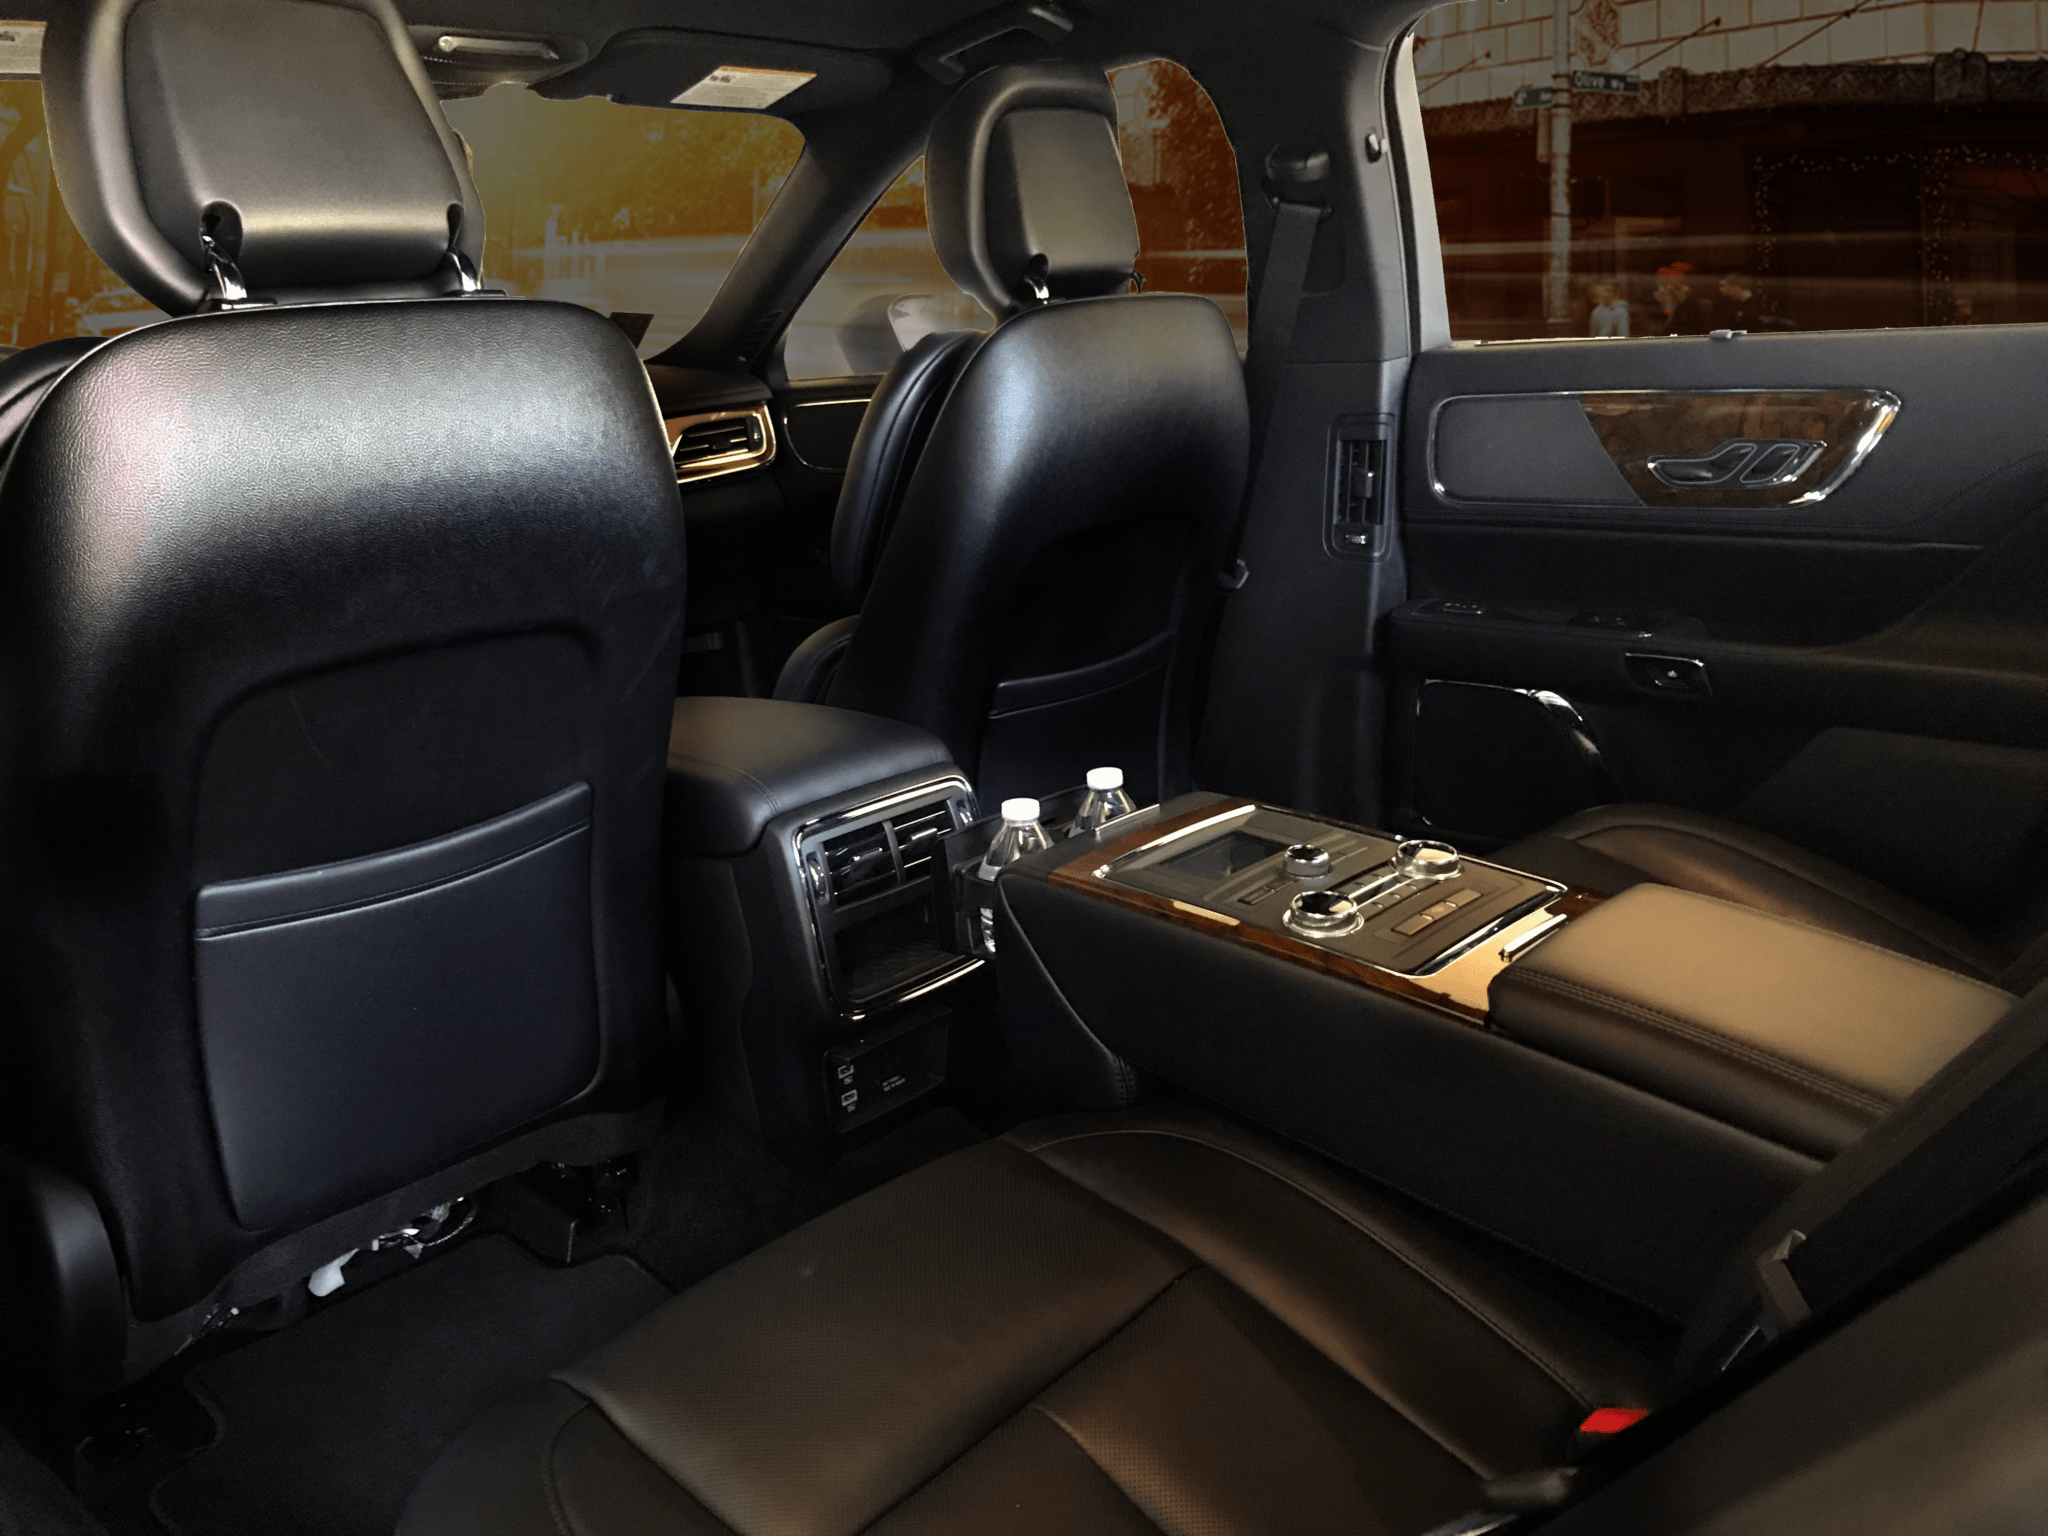 2017 lincoln contenintal interior rear driverside view